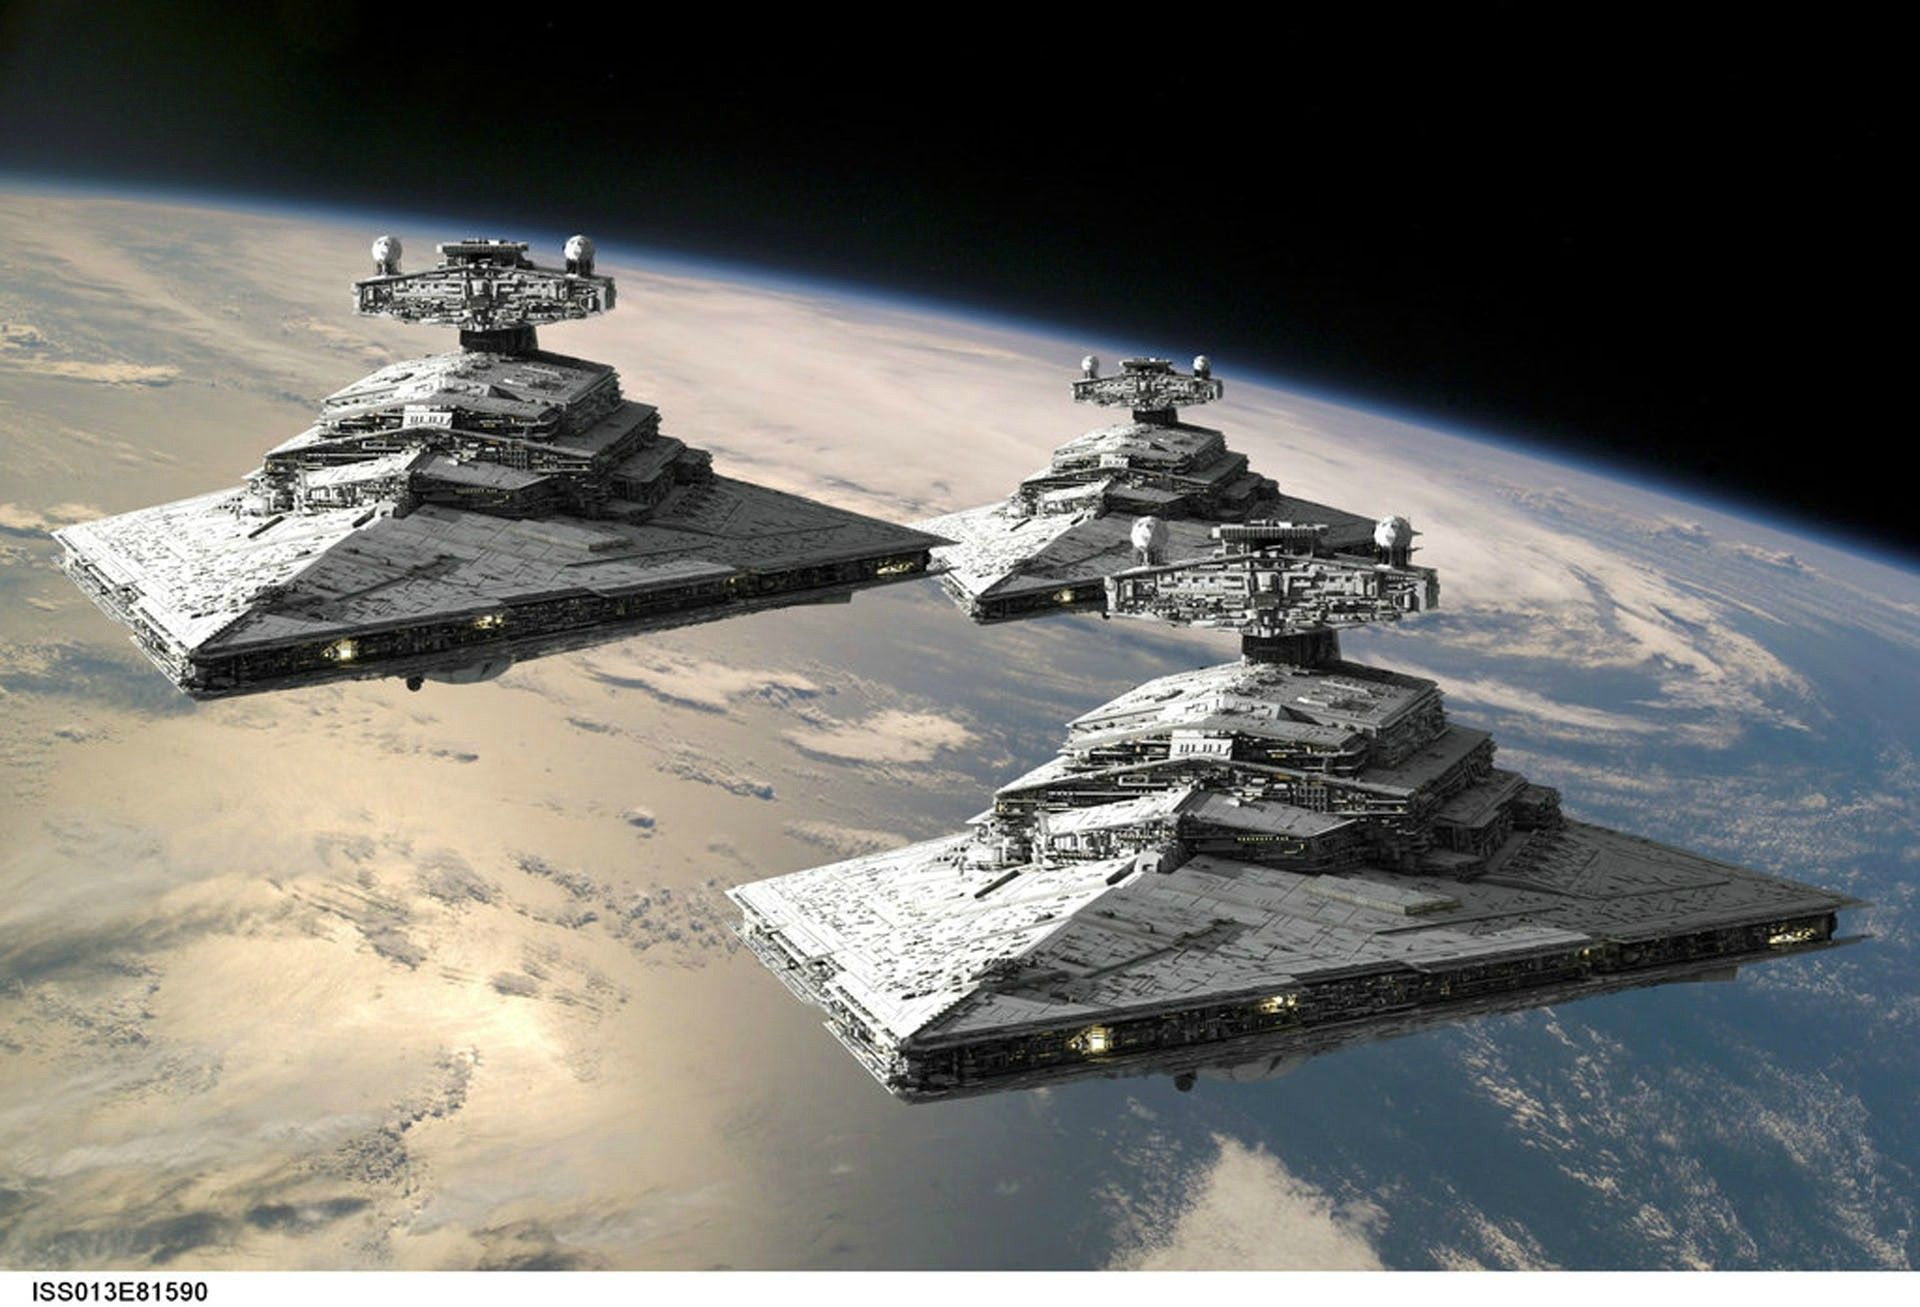 Imgur. Star wars wallpaper, Star wars spaceships, Imperial star destroyers